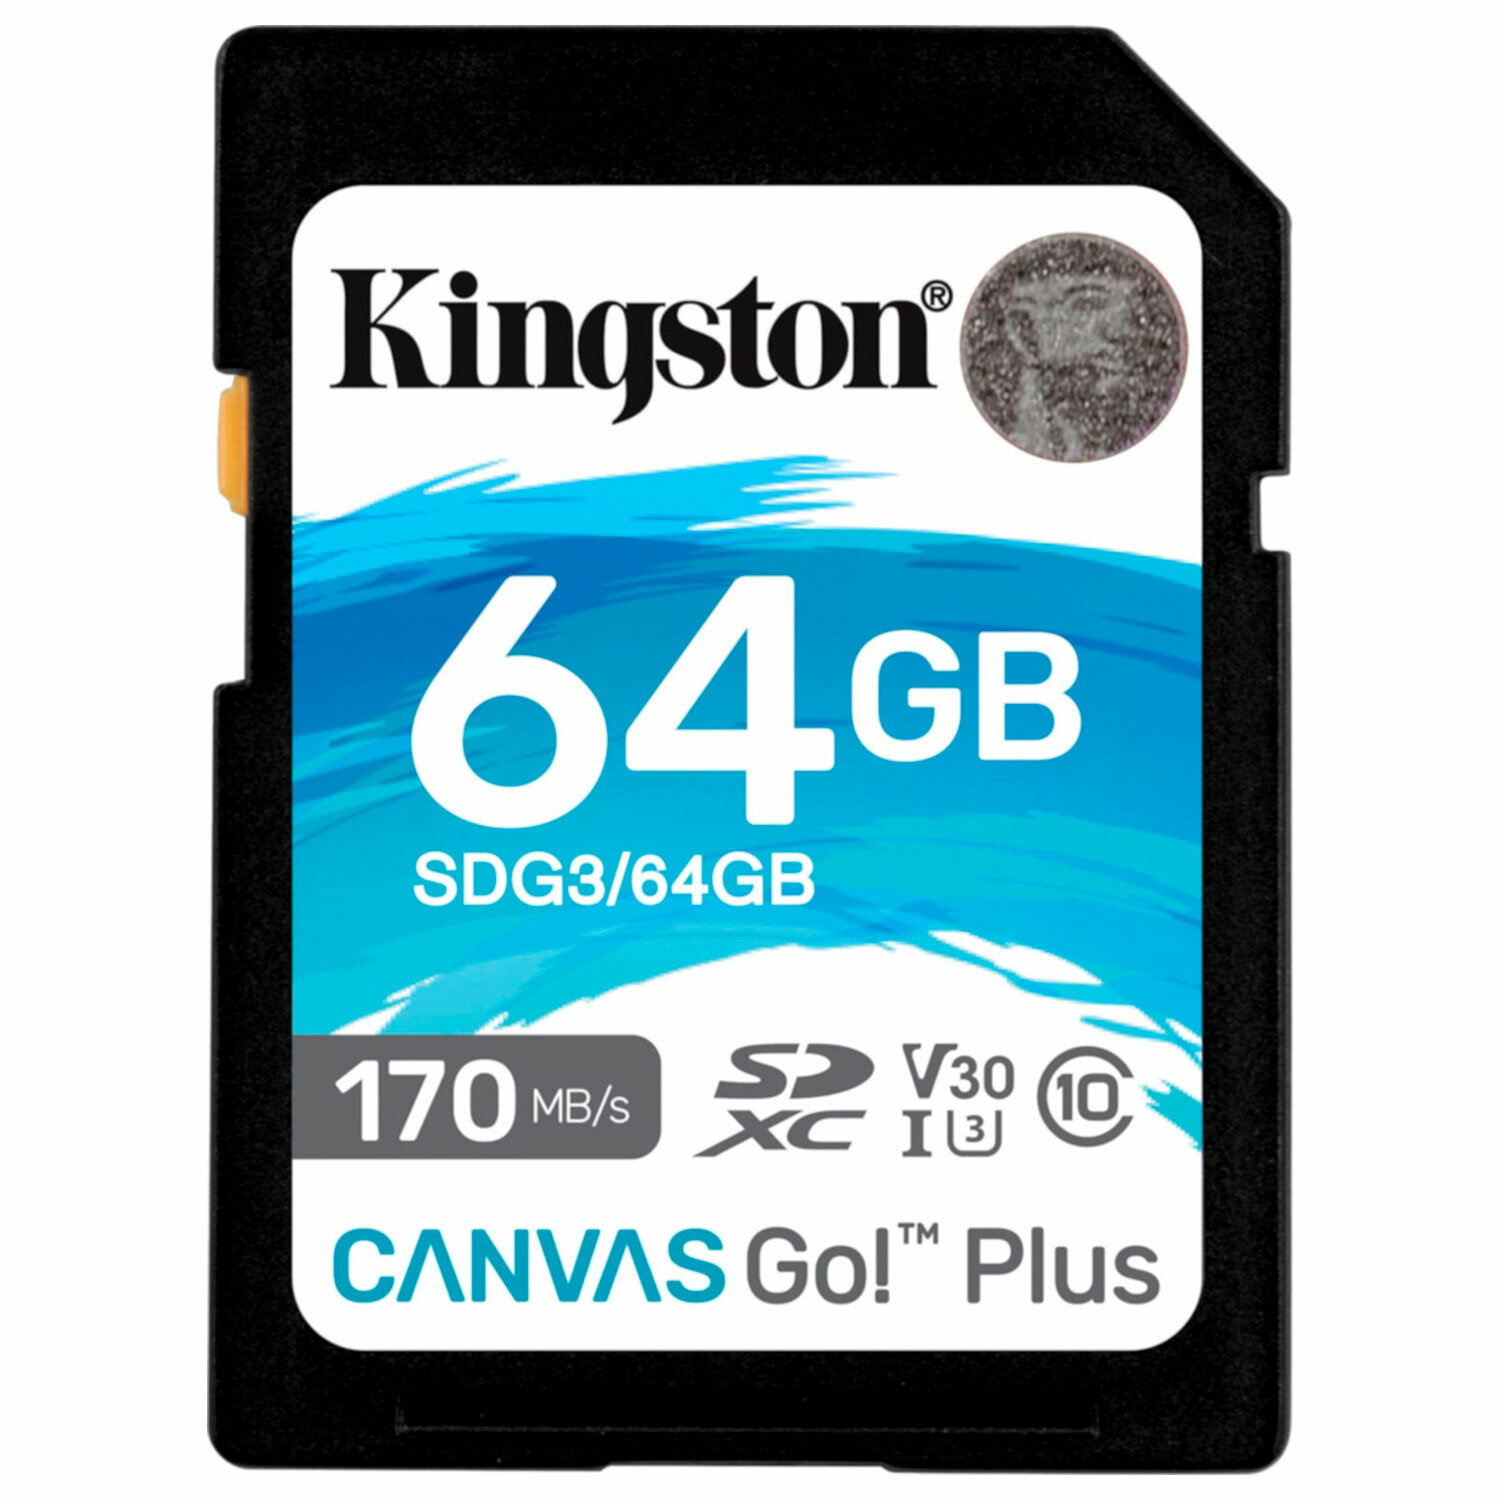  KINGSTON SDG3/64GB